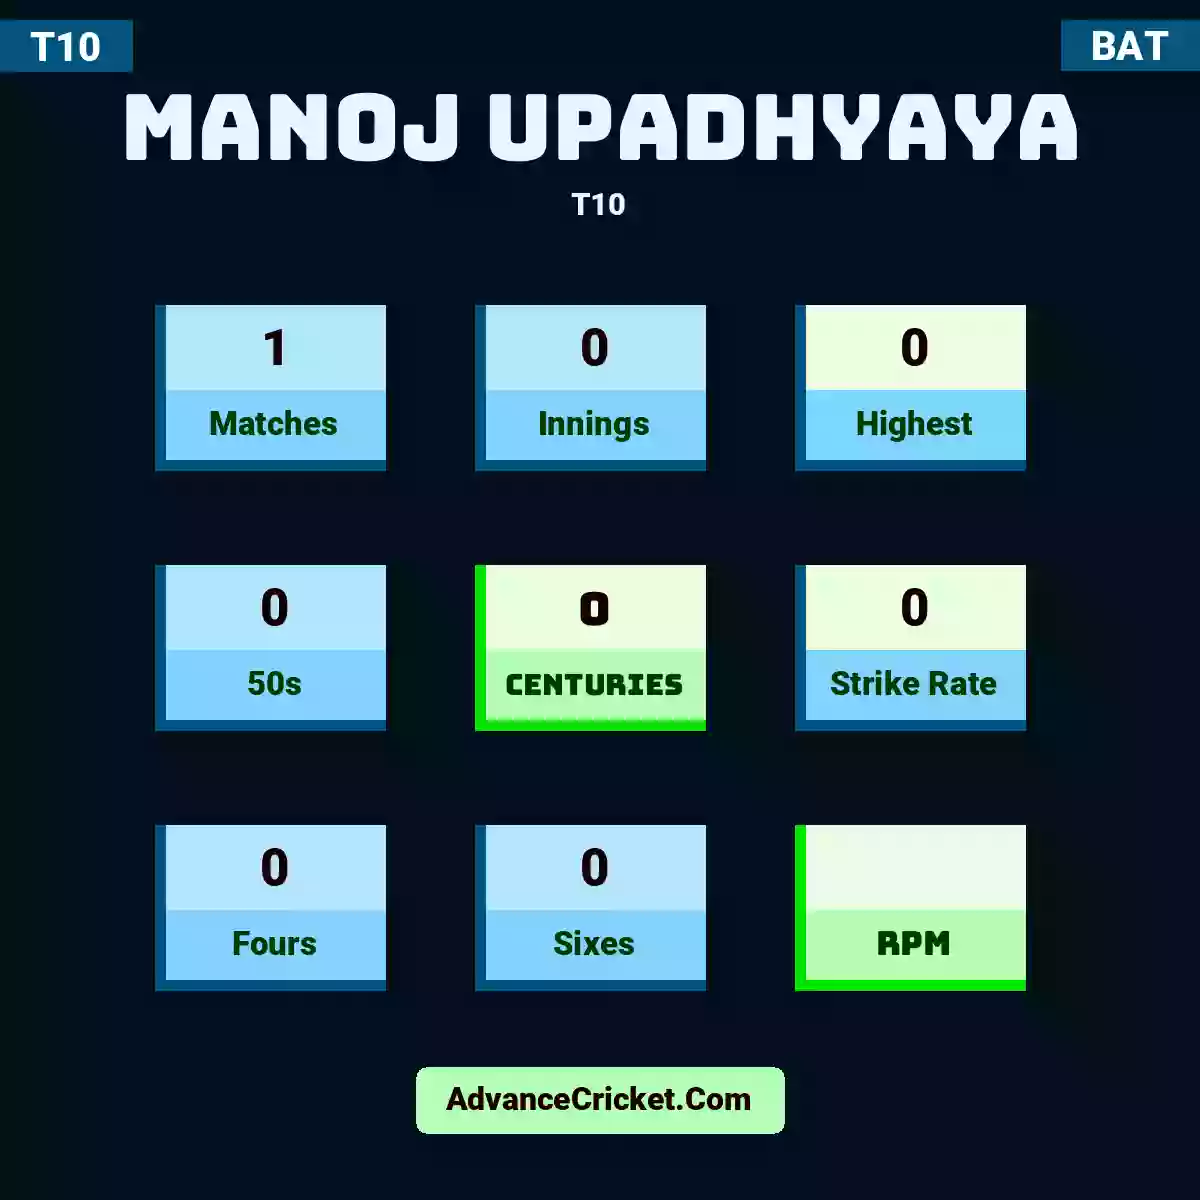 Manoj Upadhyaya T10 , Manoj Upadhyaya played 1 matches, scored 0 runs as highest, 0 half-centuries, and 0 centuries, with a strike rate of 0. M.Upadhyaya hit 0 fours and 0 sixes.